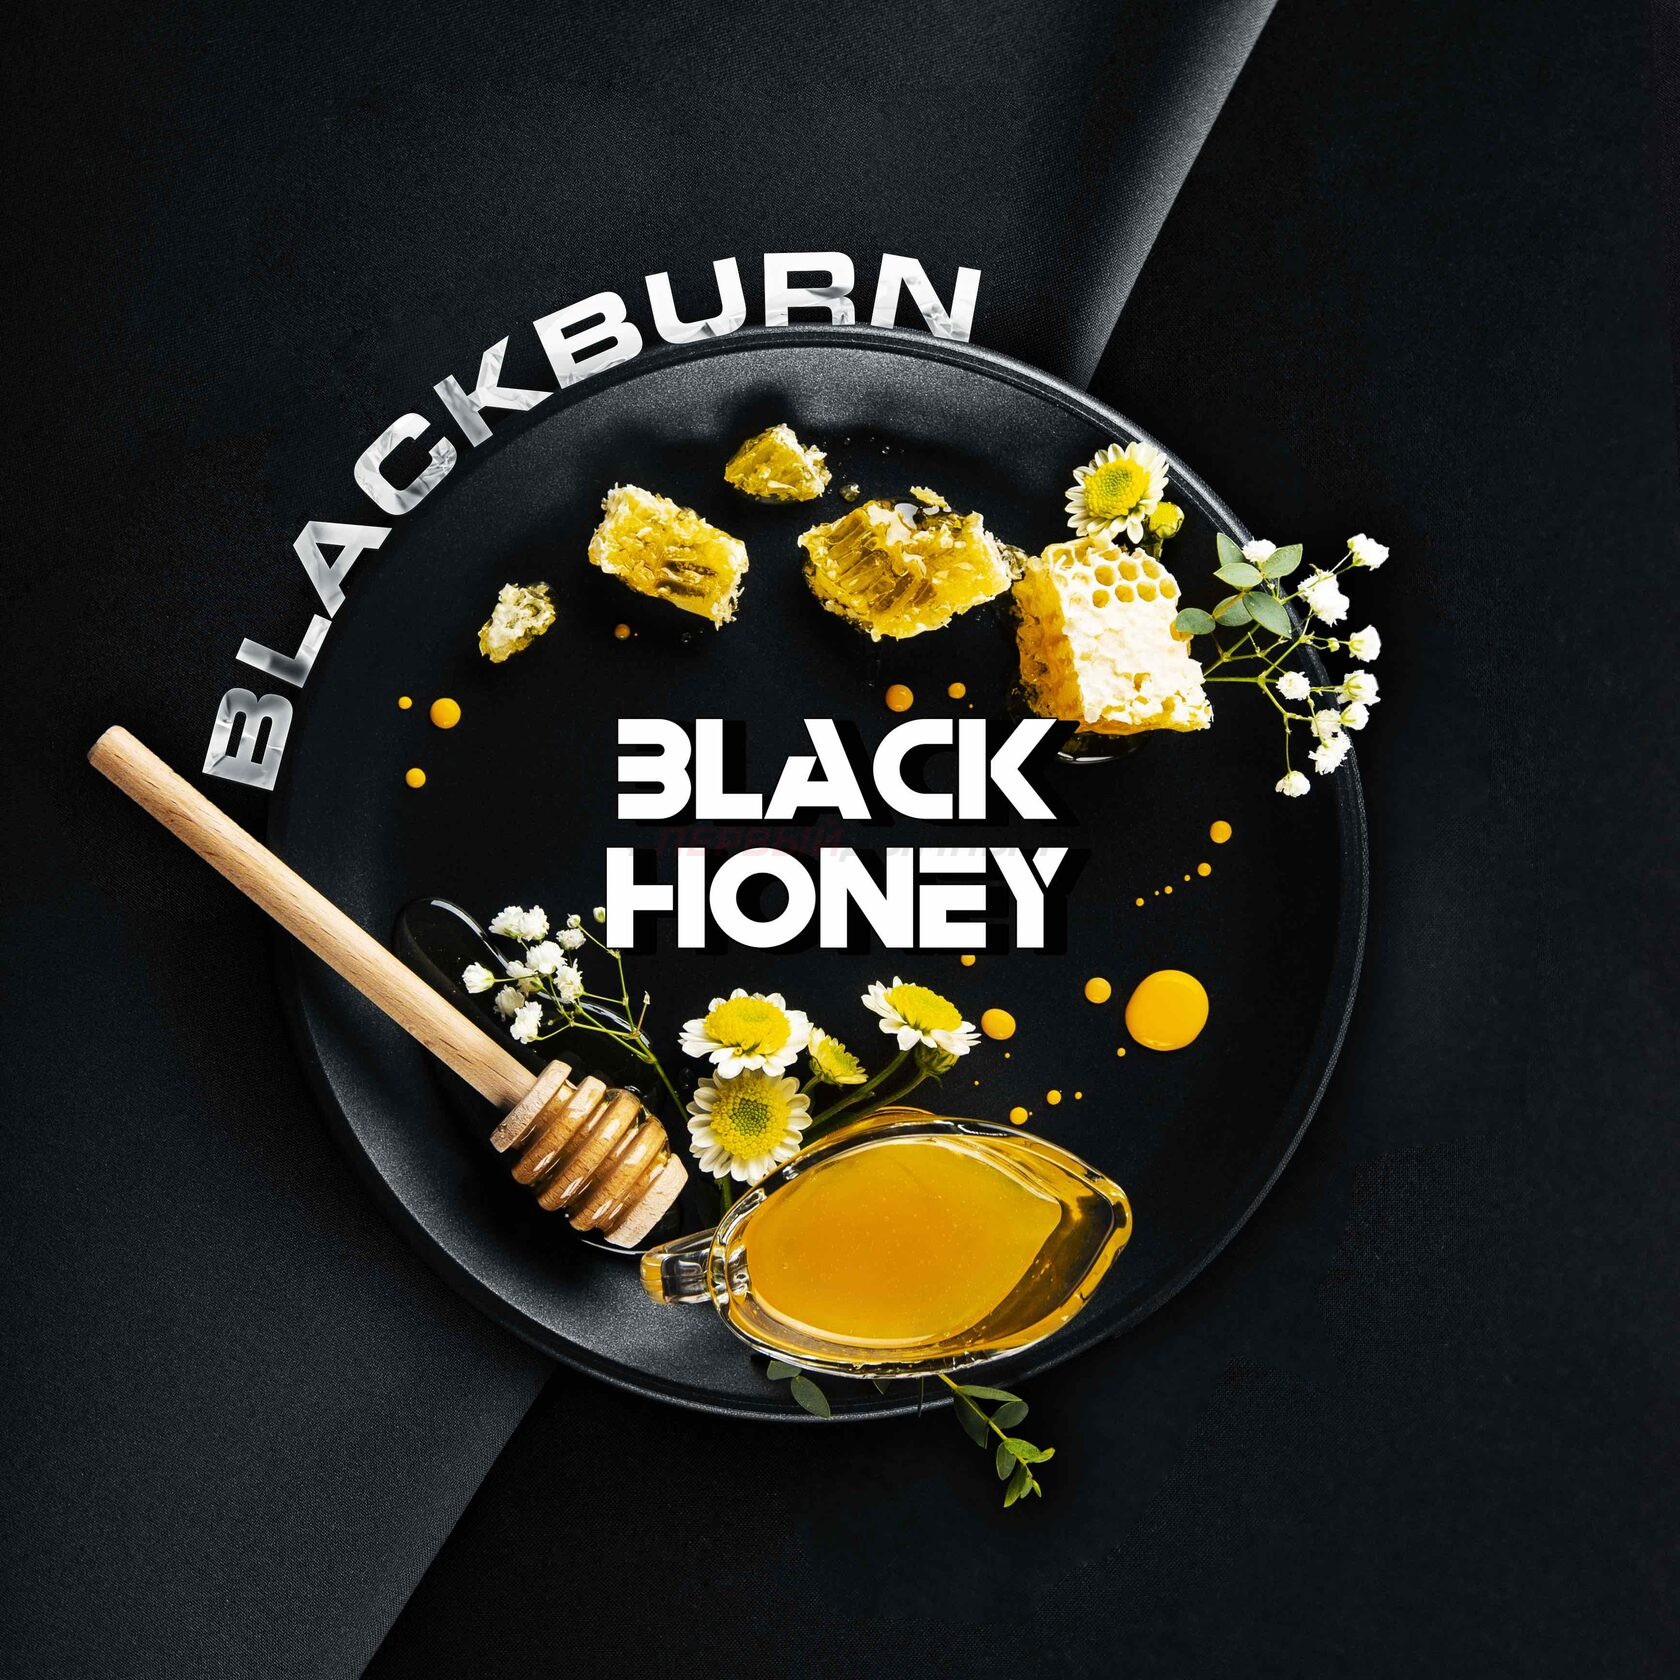 (МТ) BlackBurn 100гр Black Honey - Цветочный мед